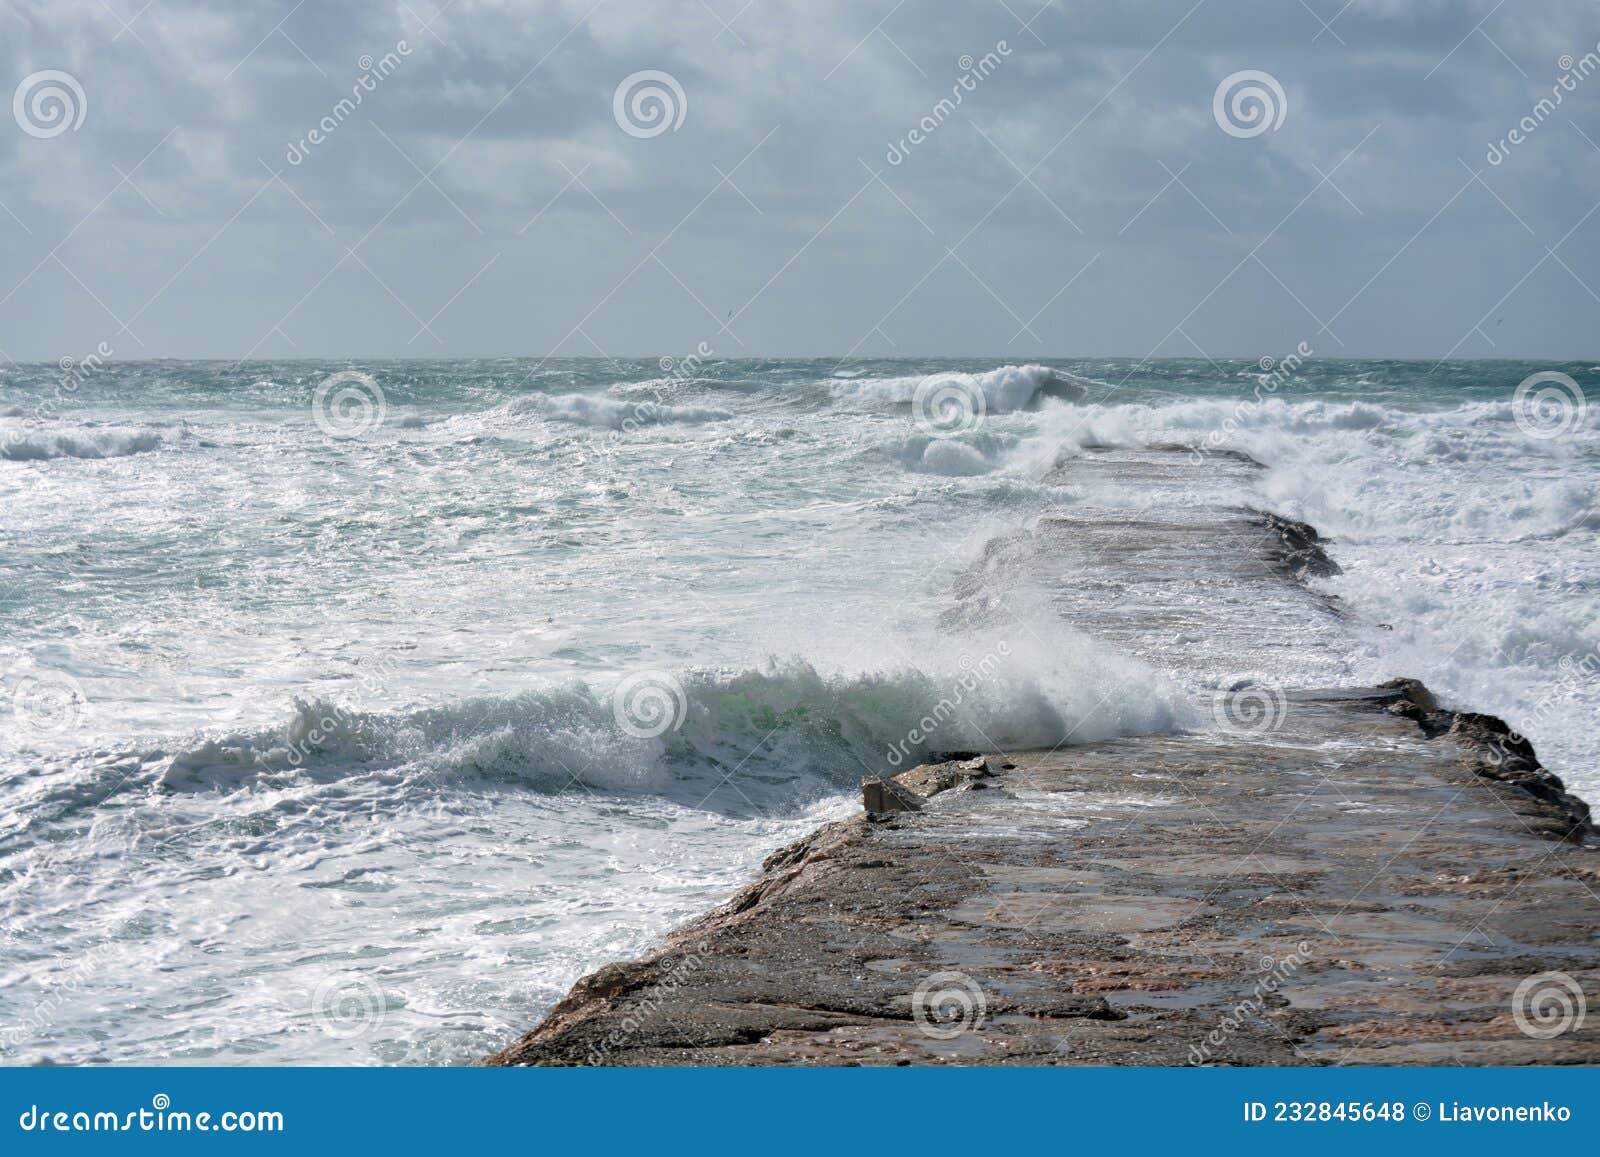 atlantic ocean beach. waves in portugal coast. season specific.